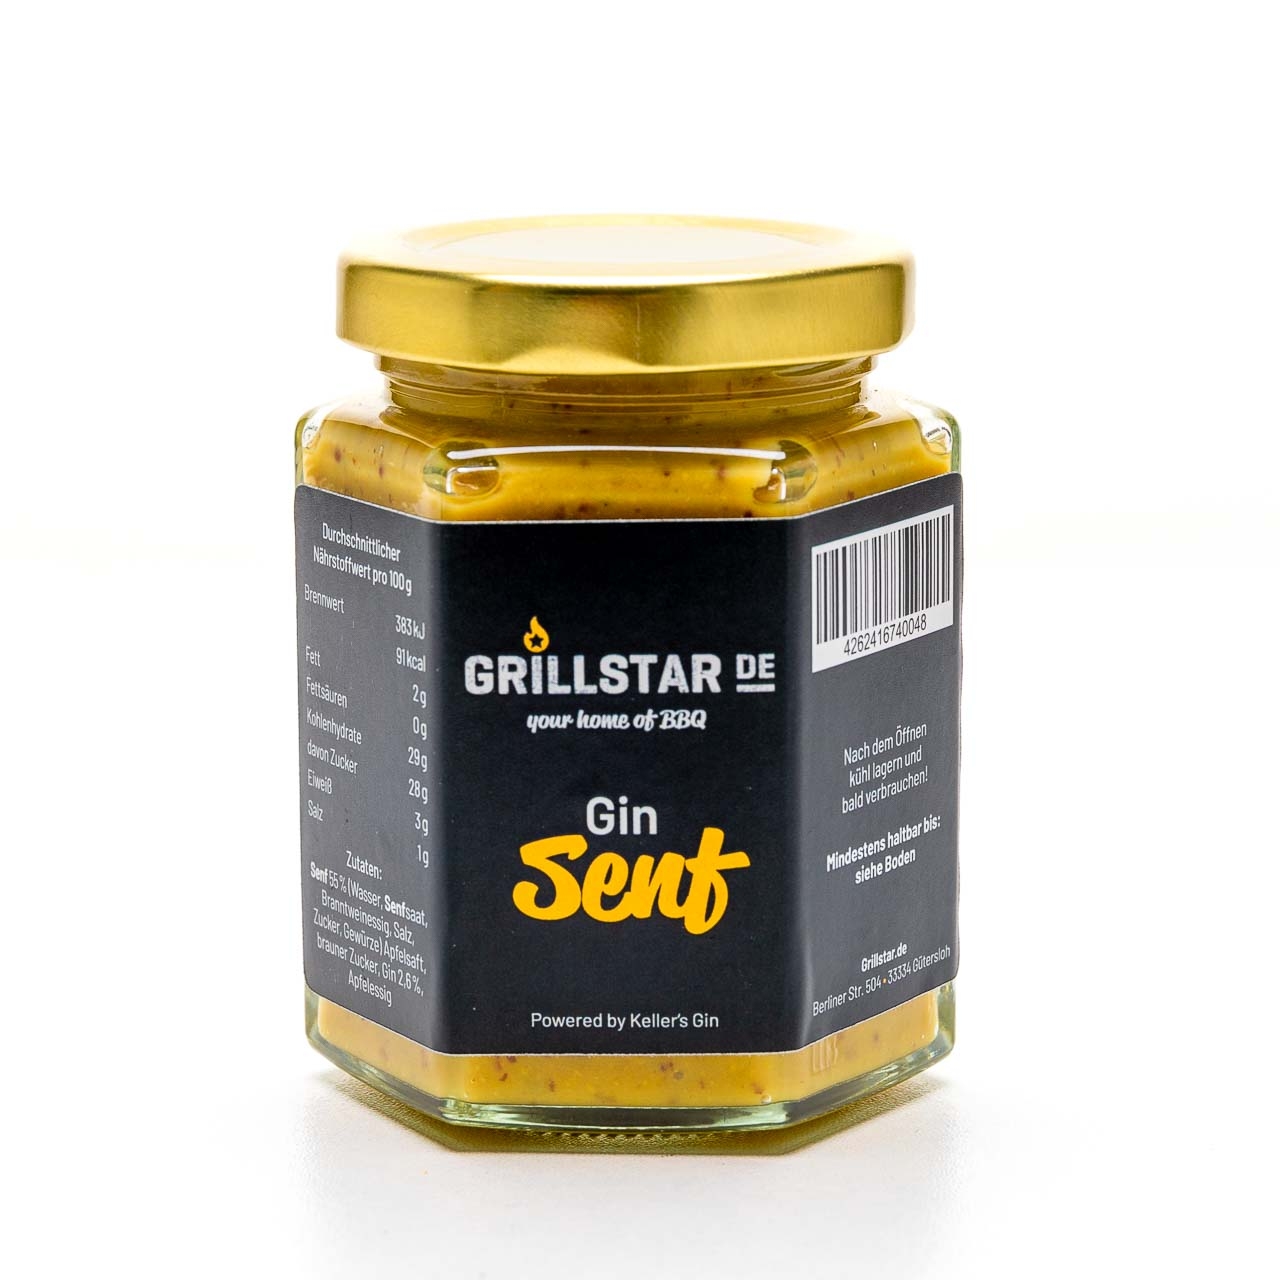 Grillstar.de - Gin-Senf